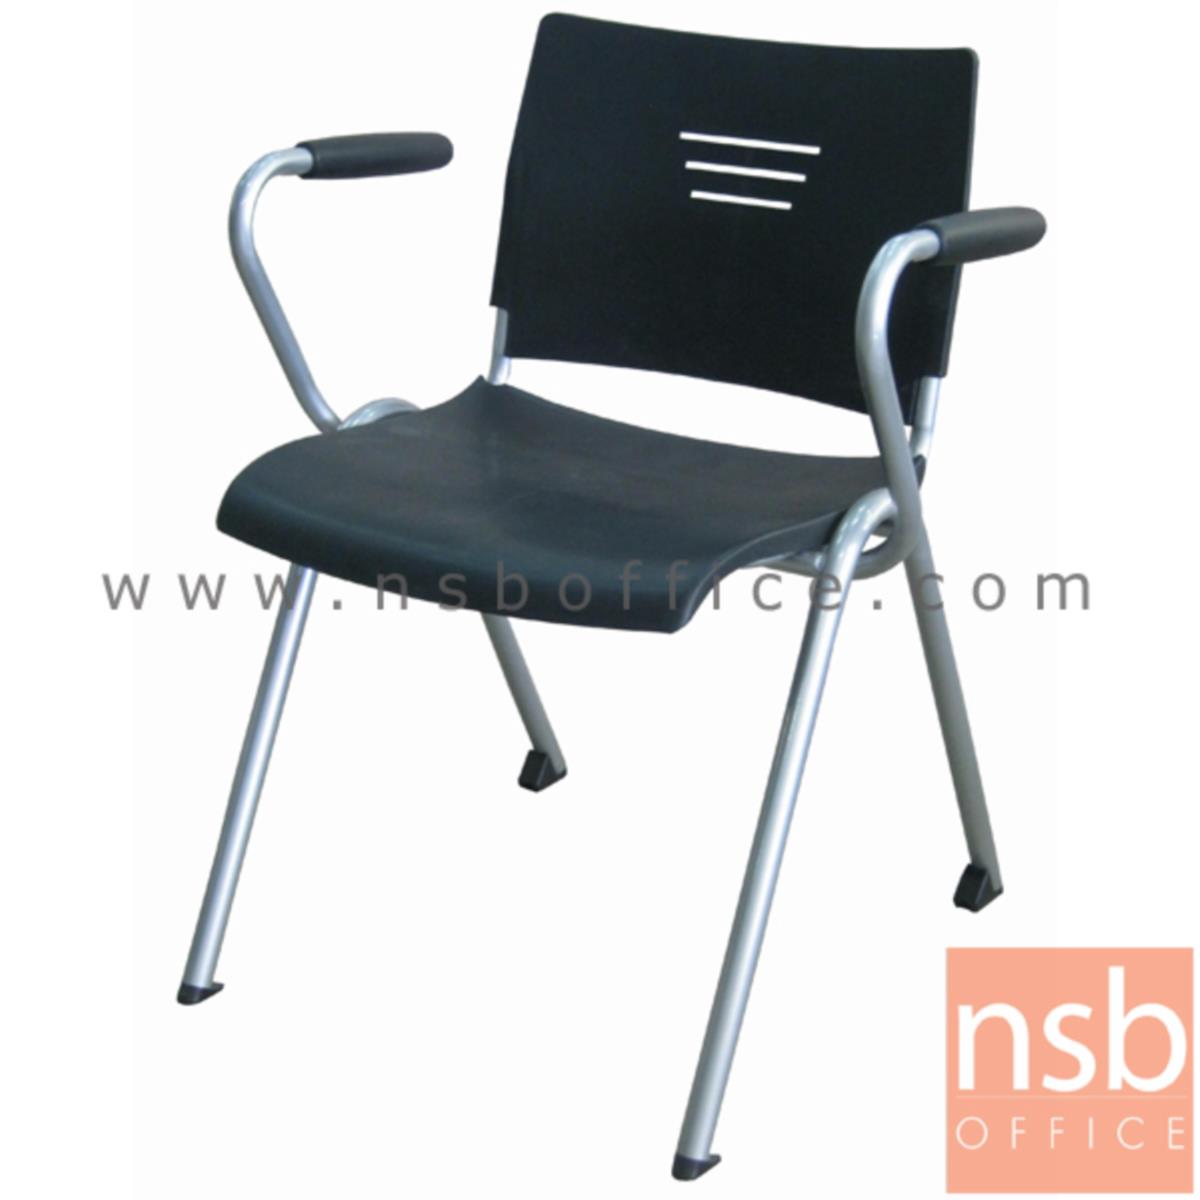 B05A131:เก้าอี้อเนกประสงค์เฟรมโพลี่ รุ่น Merlock (เมอร์ล็อก)  ขาเหล็กพ่นสี epoxy